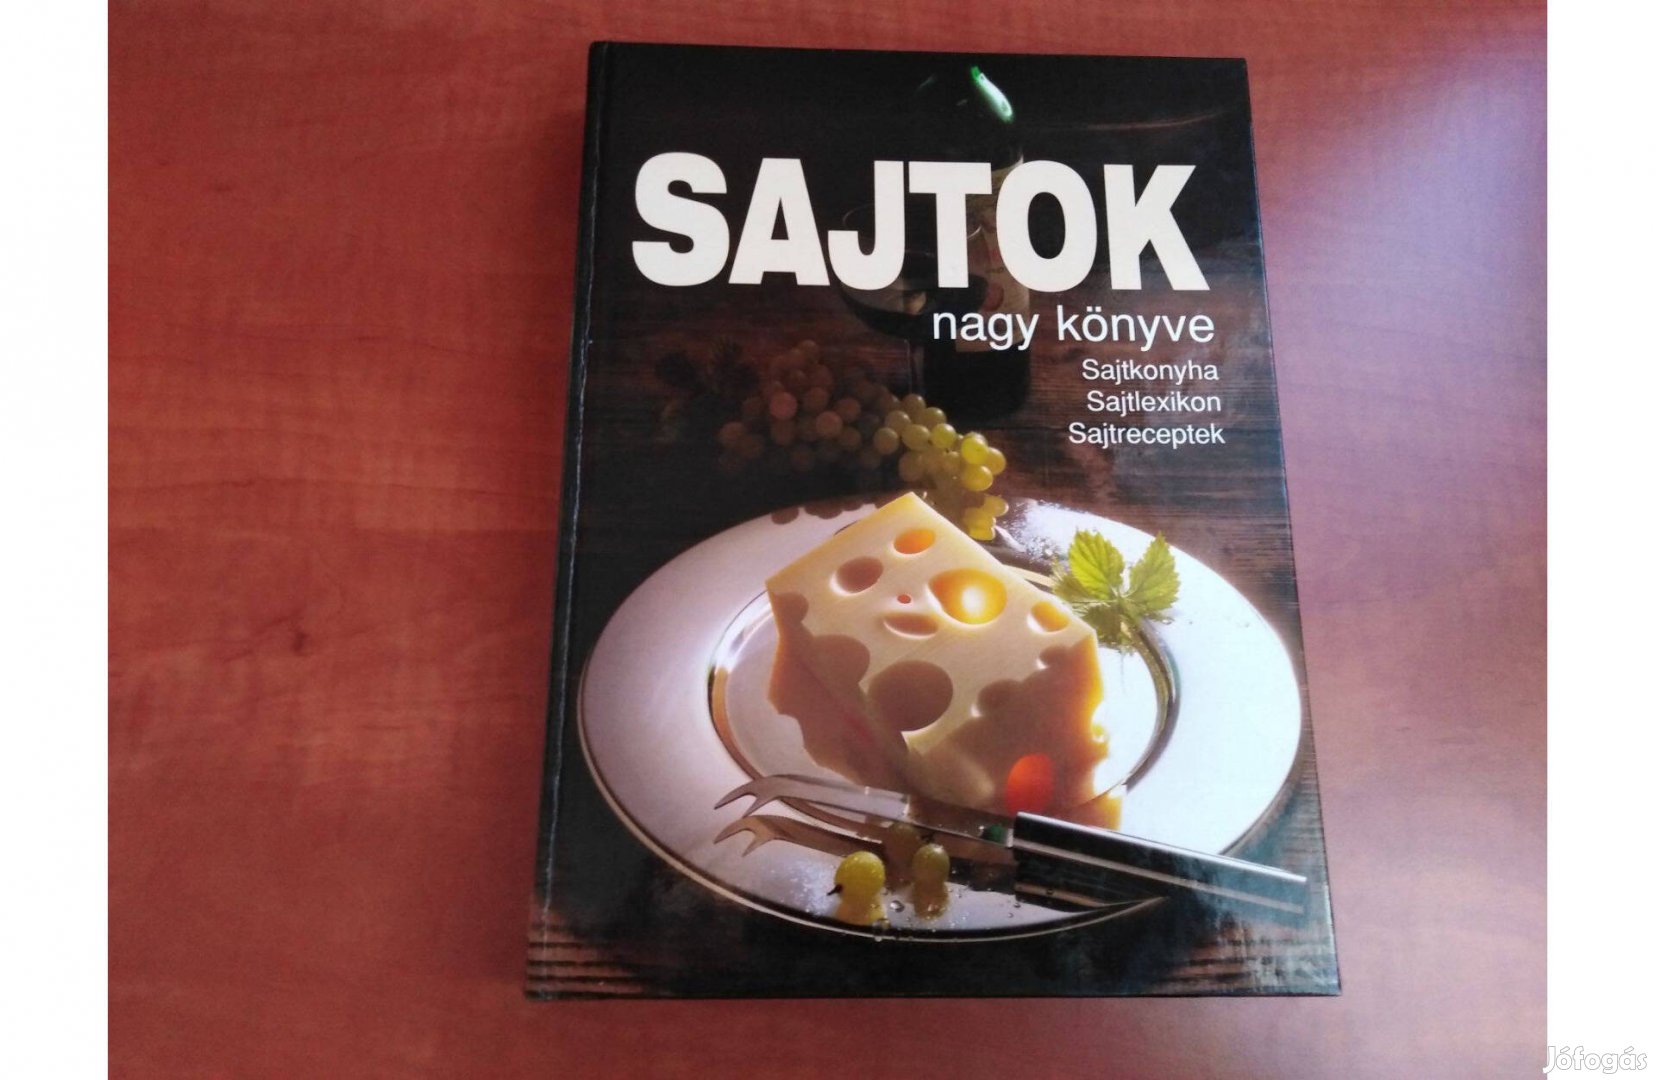 Sajtok nagy könyve - Sajtkonyha, sajtlexikon, sajtreceptek